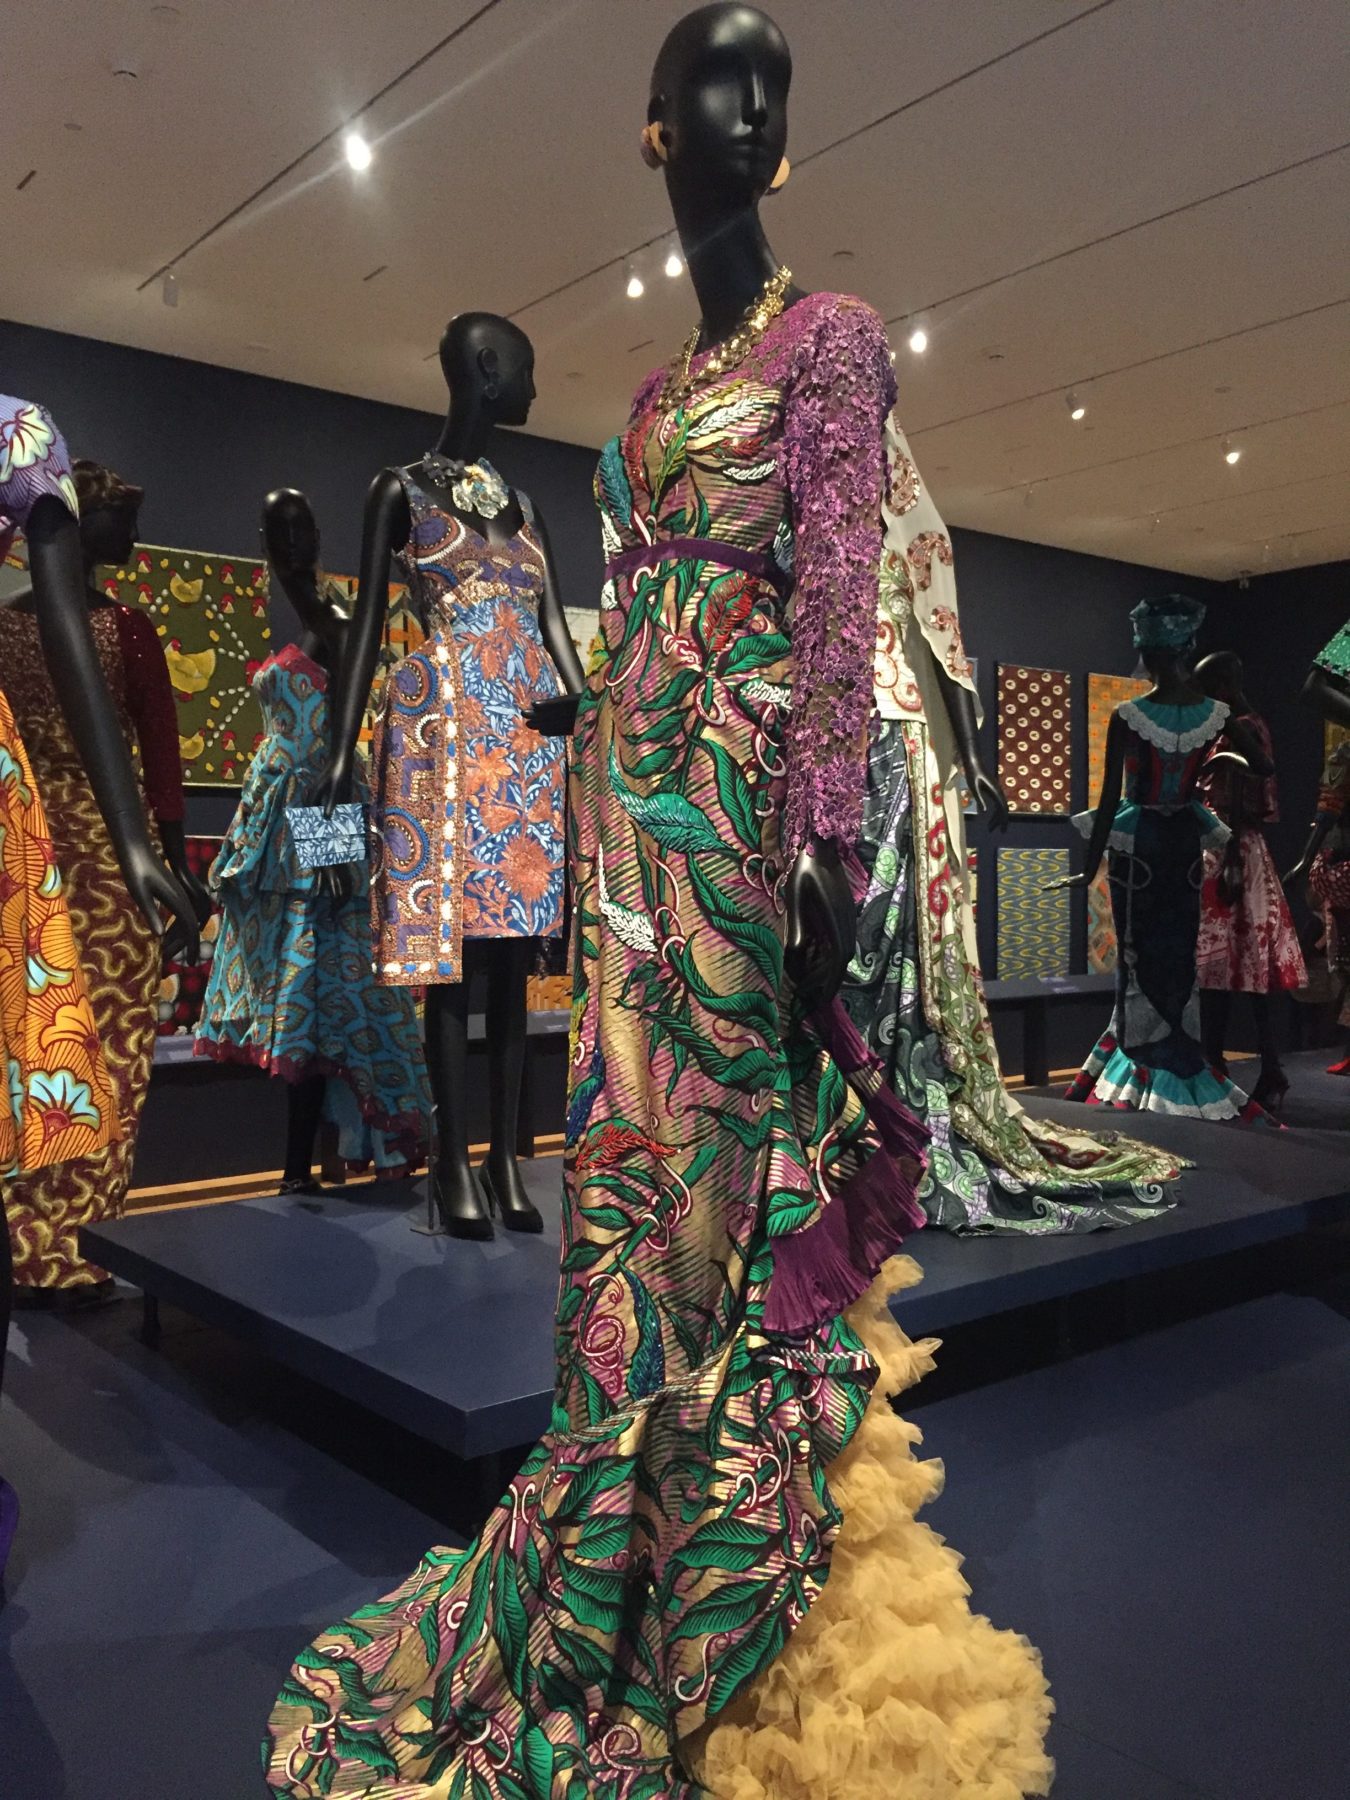 Gala Dress. Designed by Lanre da Silva Ajayi for Vlisco. Splendeur collection, season 4, 2014. Cotton; wax block print. Lanre da Silva Ajayi is one of Nigerias foremost fashion designers.